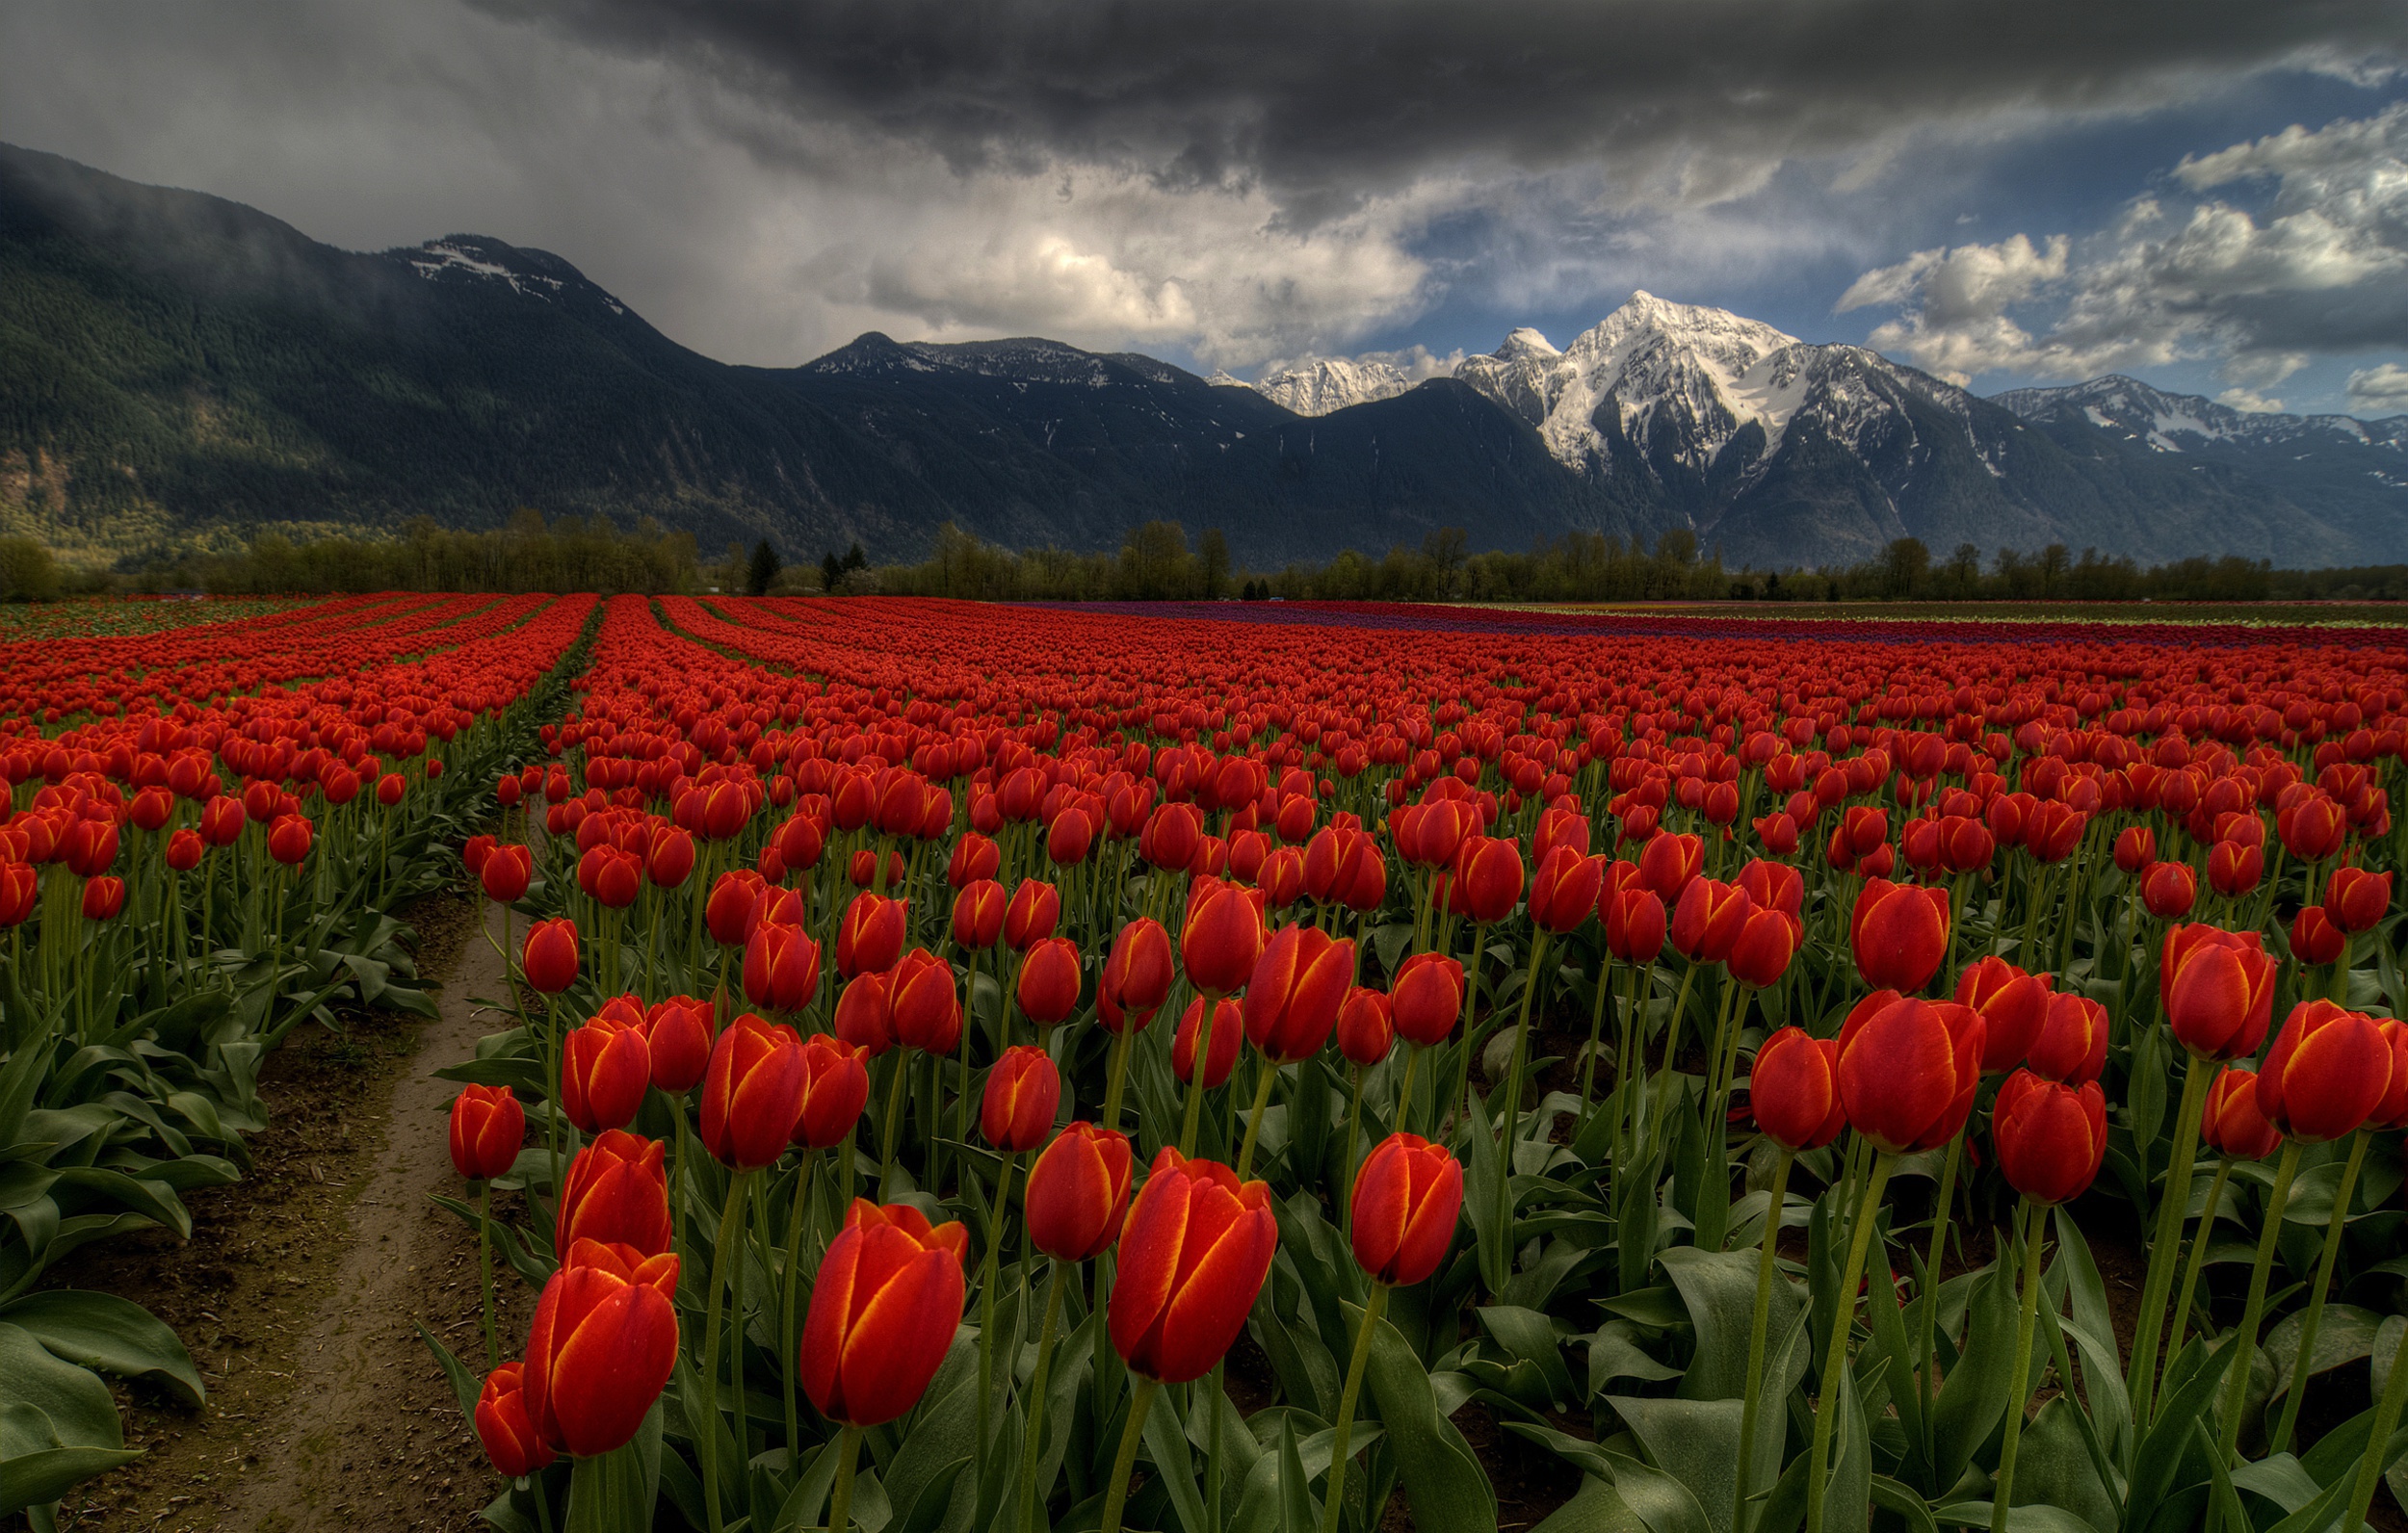 General 2500x1592 outdoors landscape flowers plants Agro (Plants) tulips red flowers mountains snowy peak field